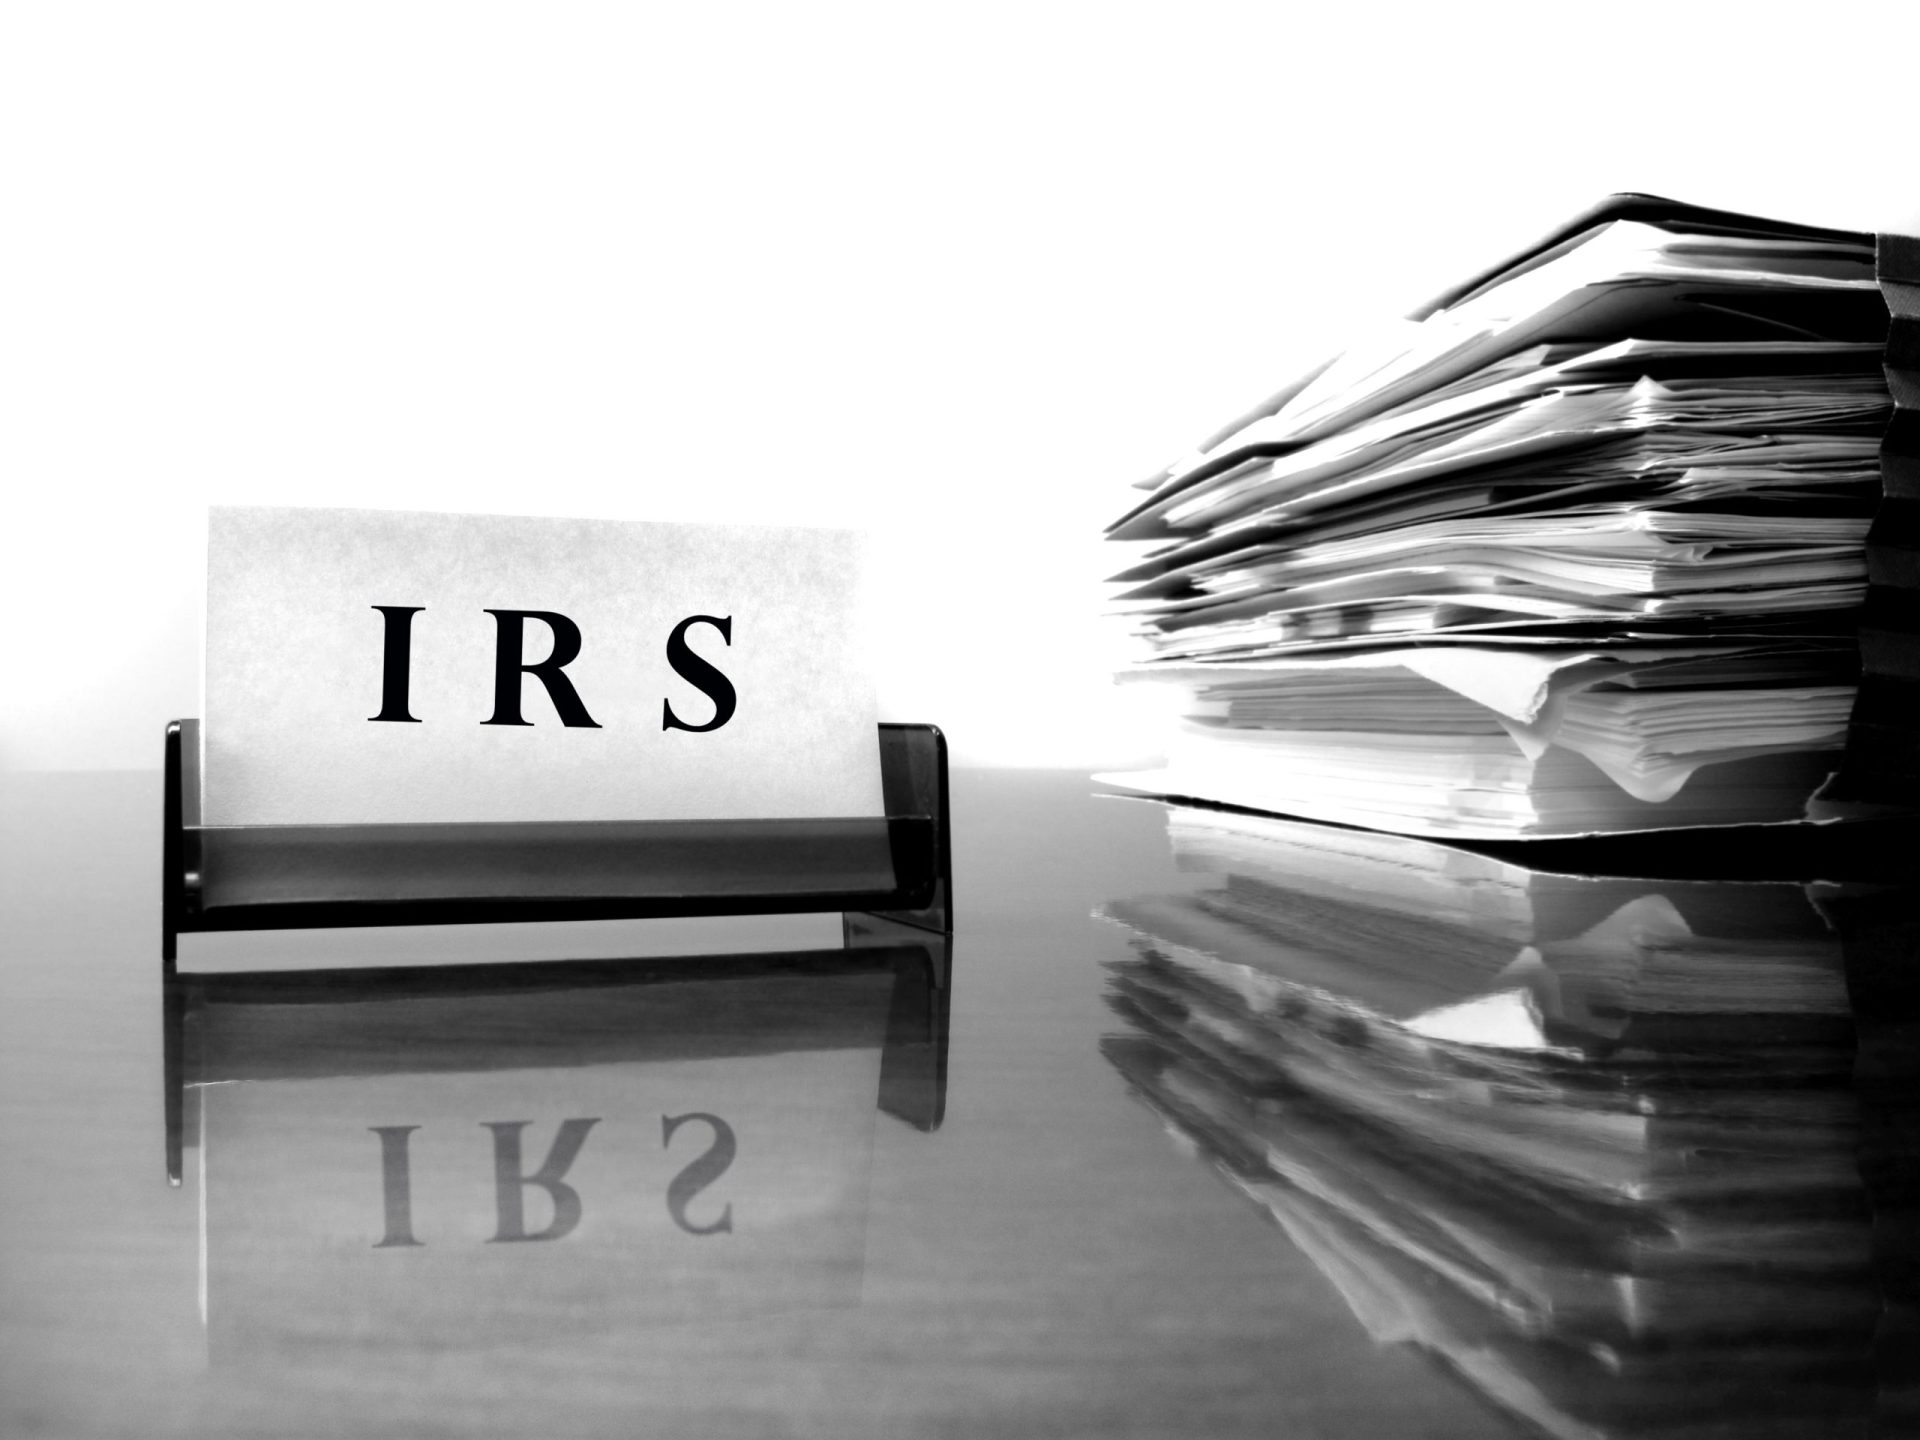 Proposta de descida de IRS beneficia “classe média”